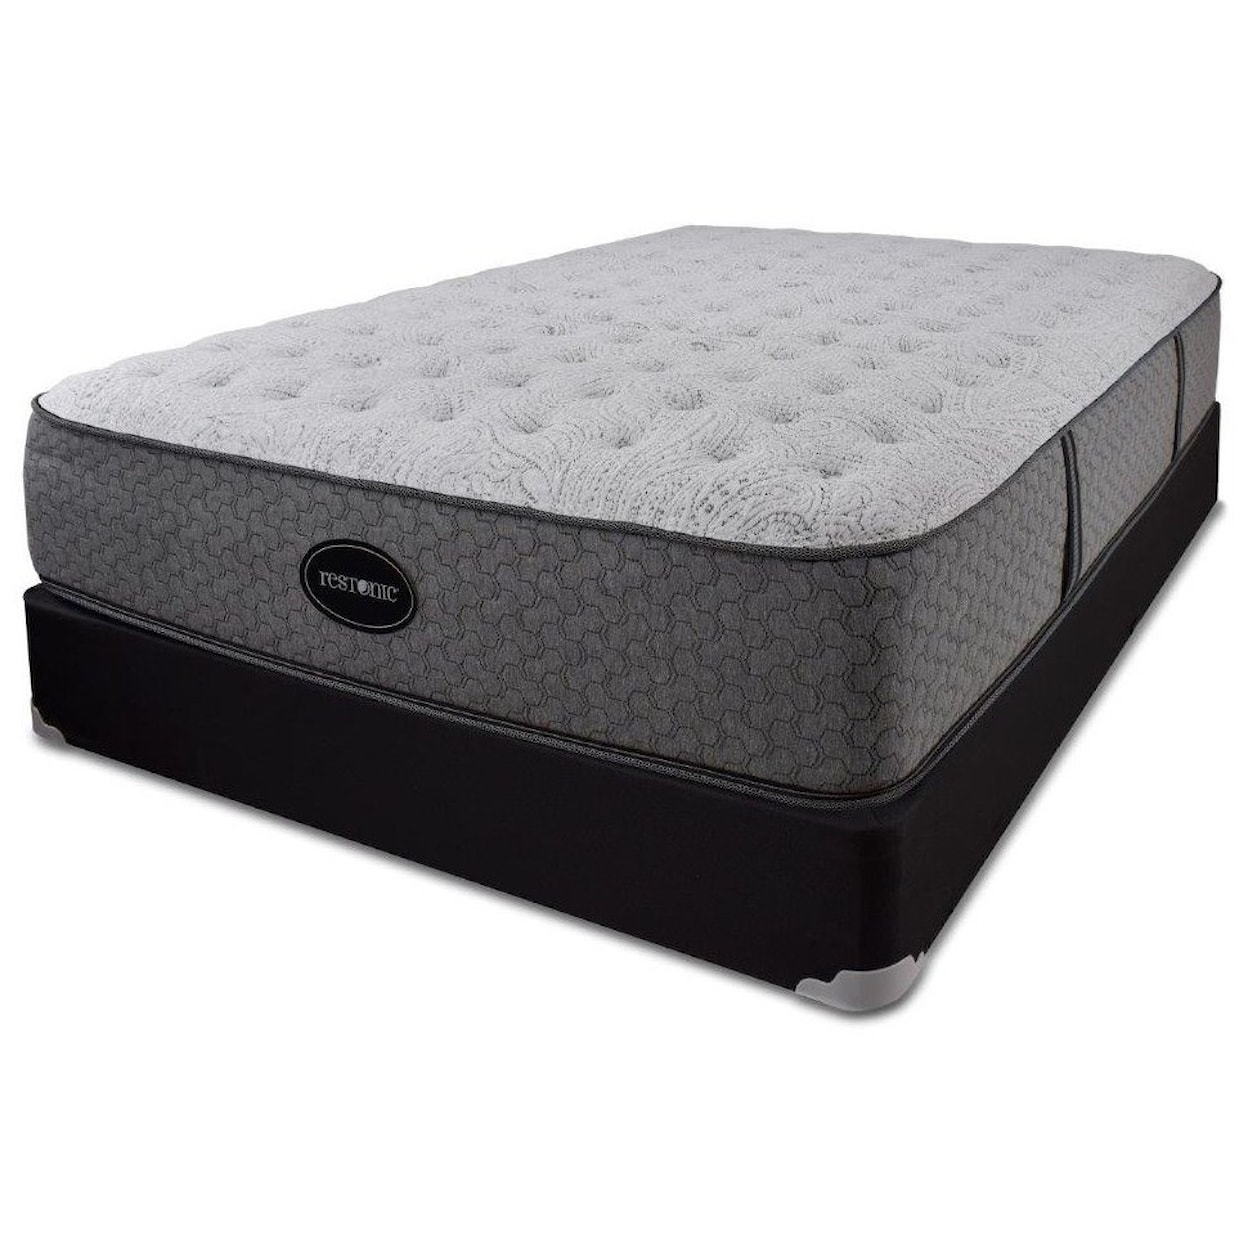 Restonic Blackcomb Cushion Firm Queen Comfort Firm Low Profile Set